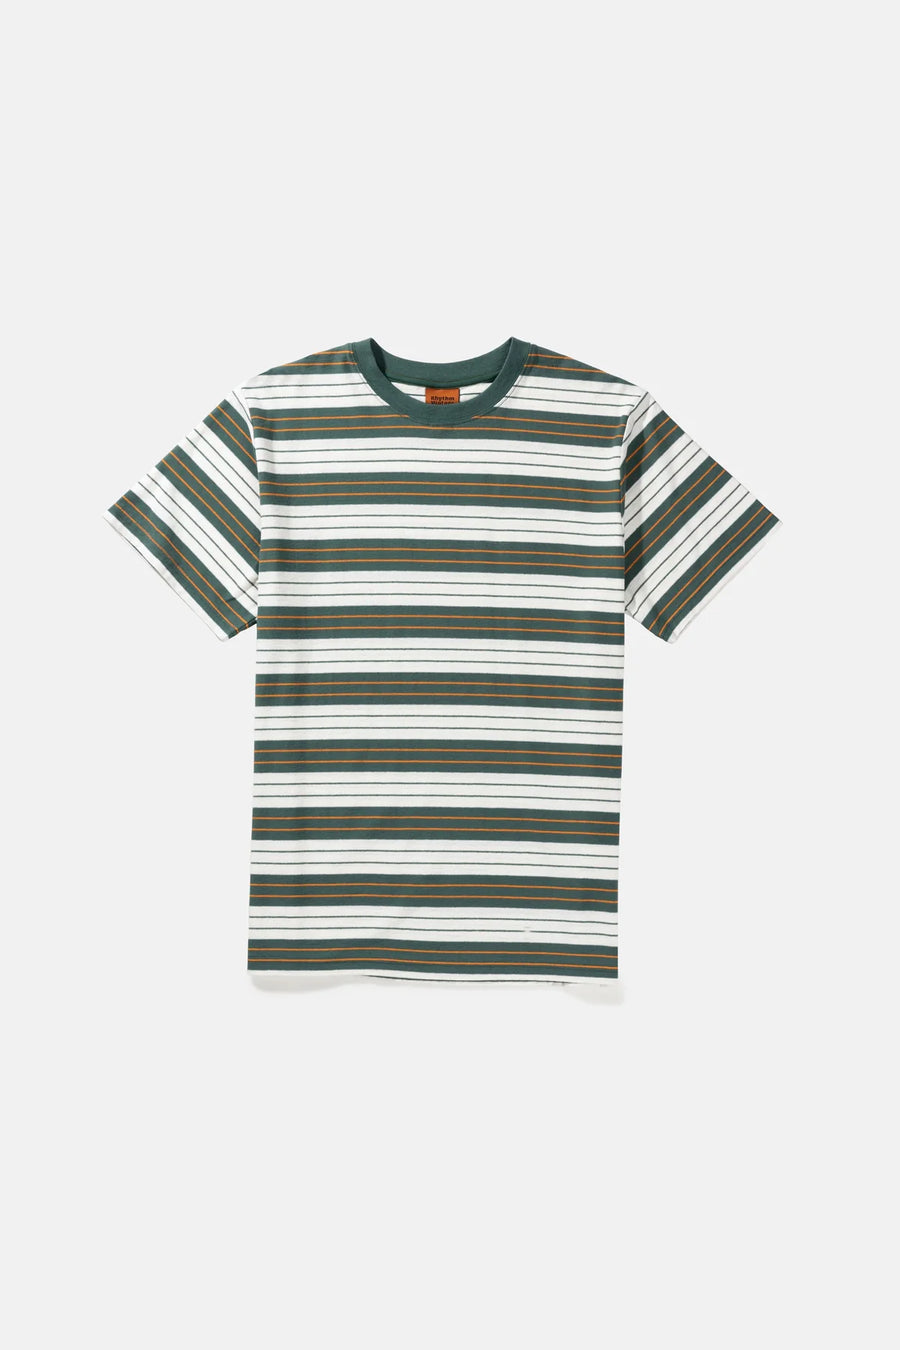 Rhythm Vintage Stripe T-Shirt